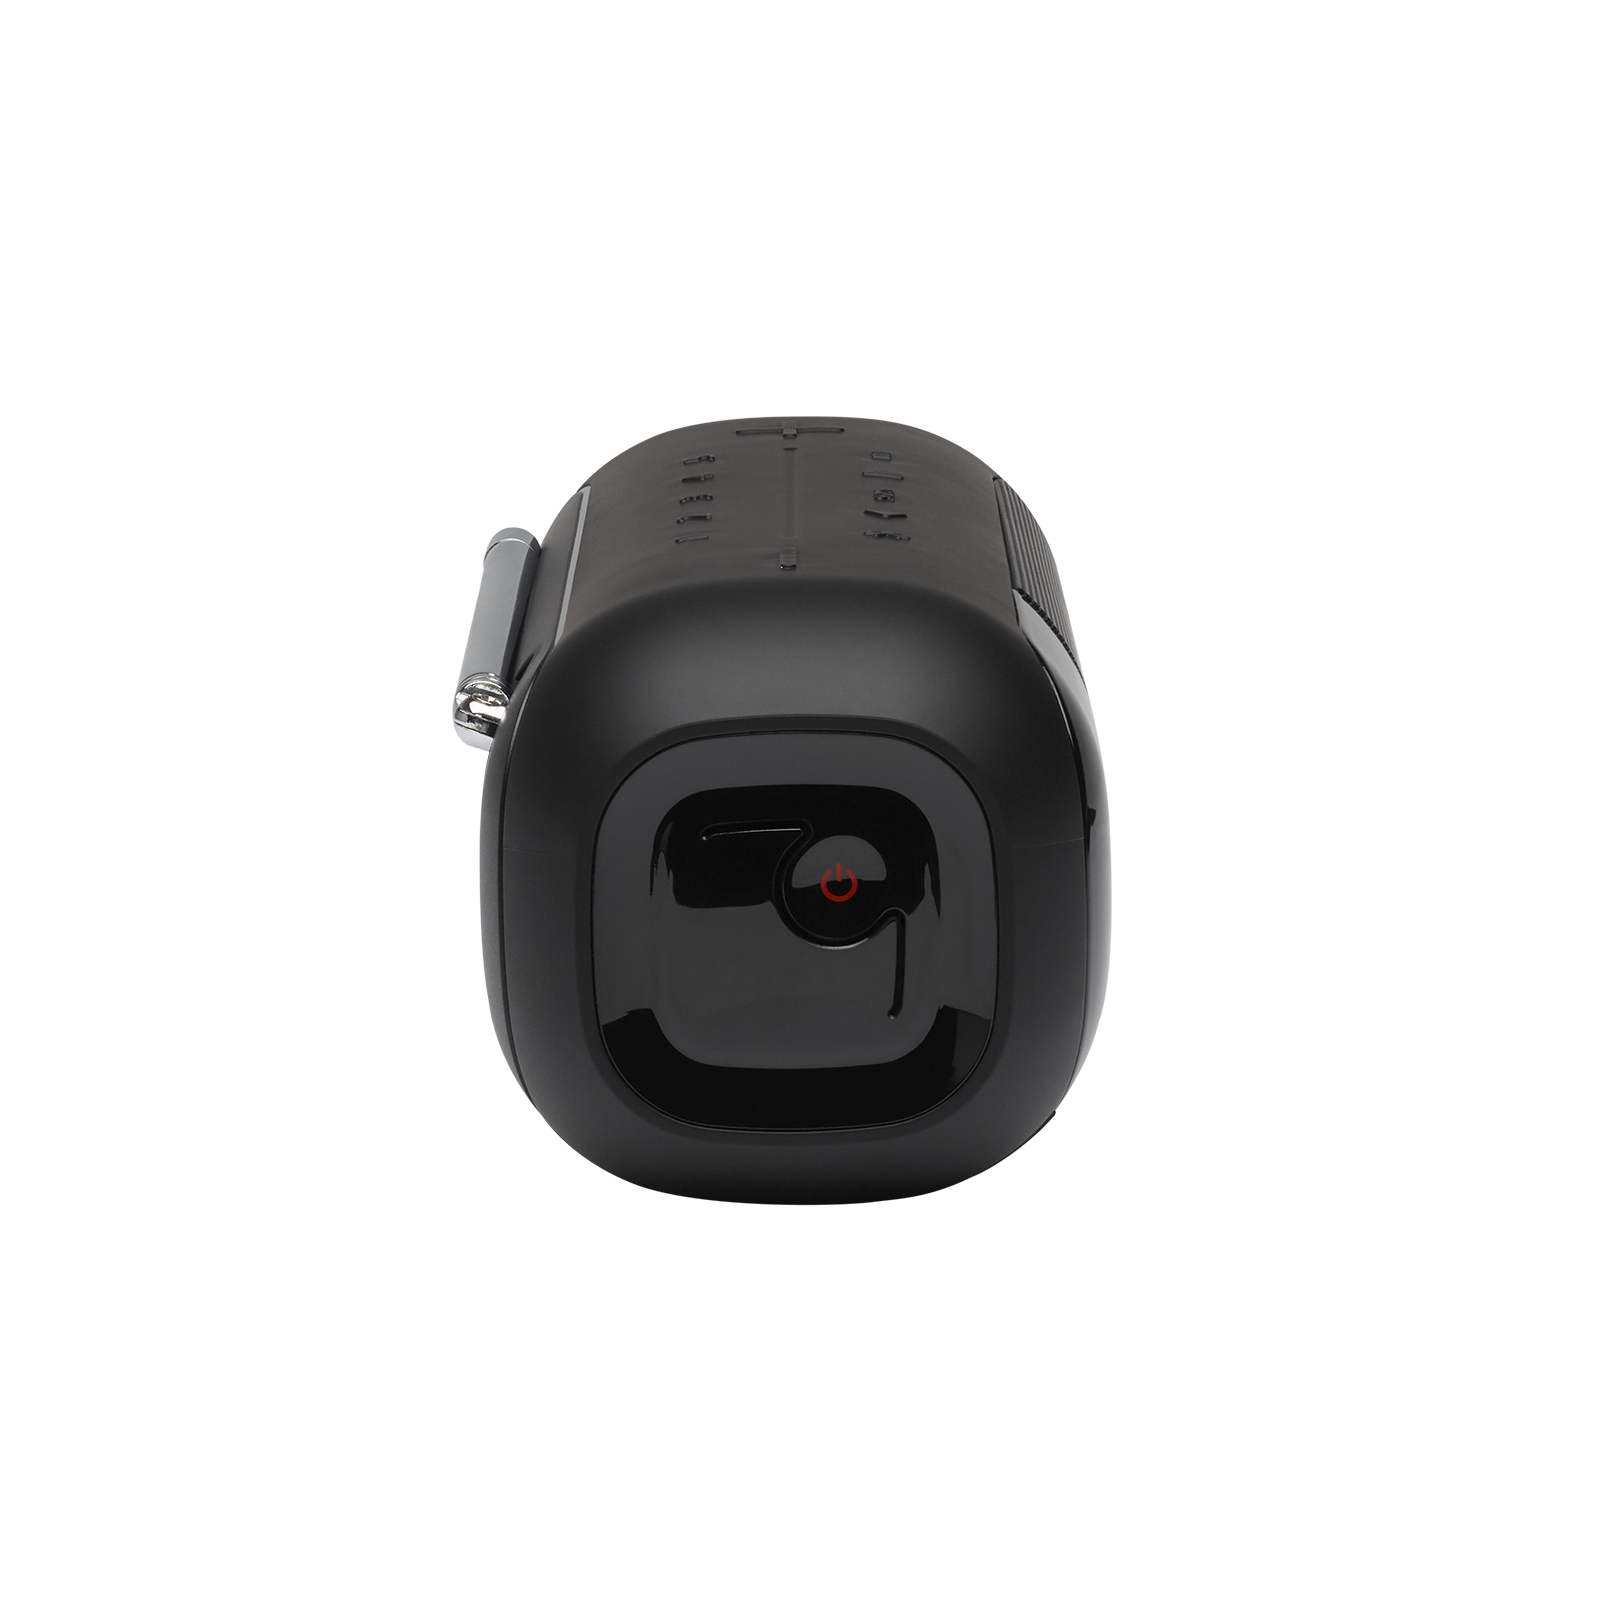 JBL Tuner 2 FM - Black - Portable FM radio with Bluetooth - Detailshot 1